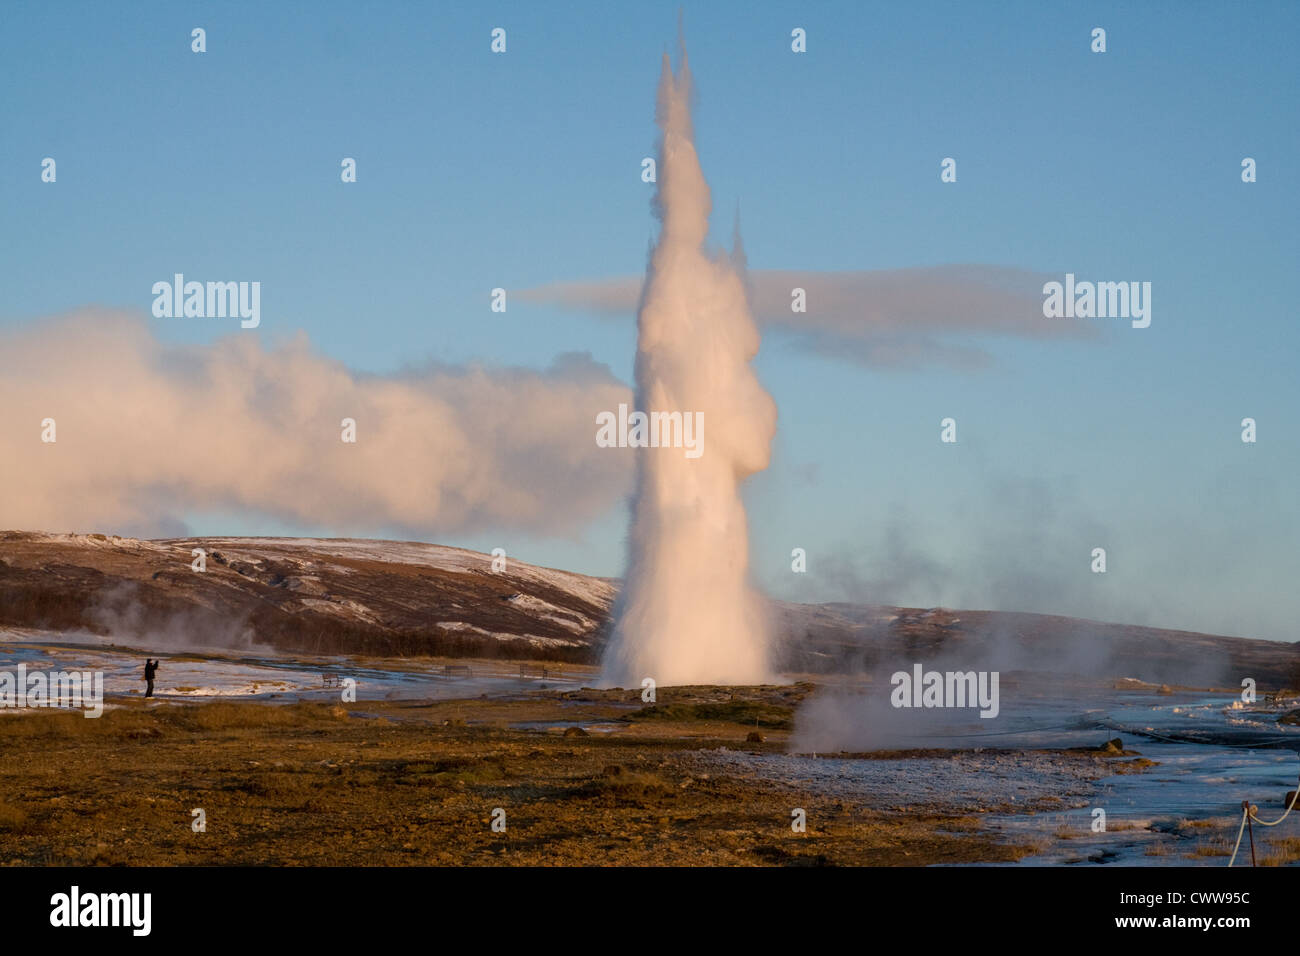 Erupting geyser in Iceland Stock Photo